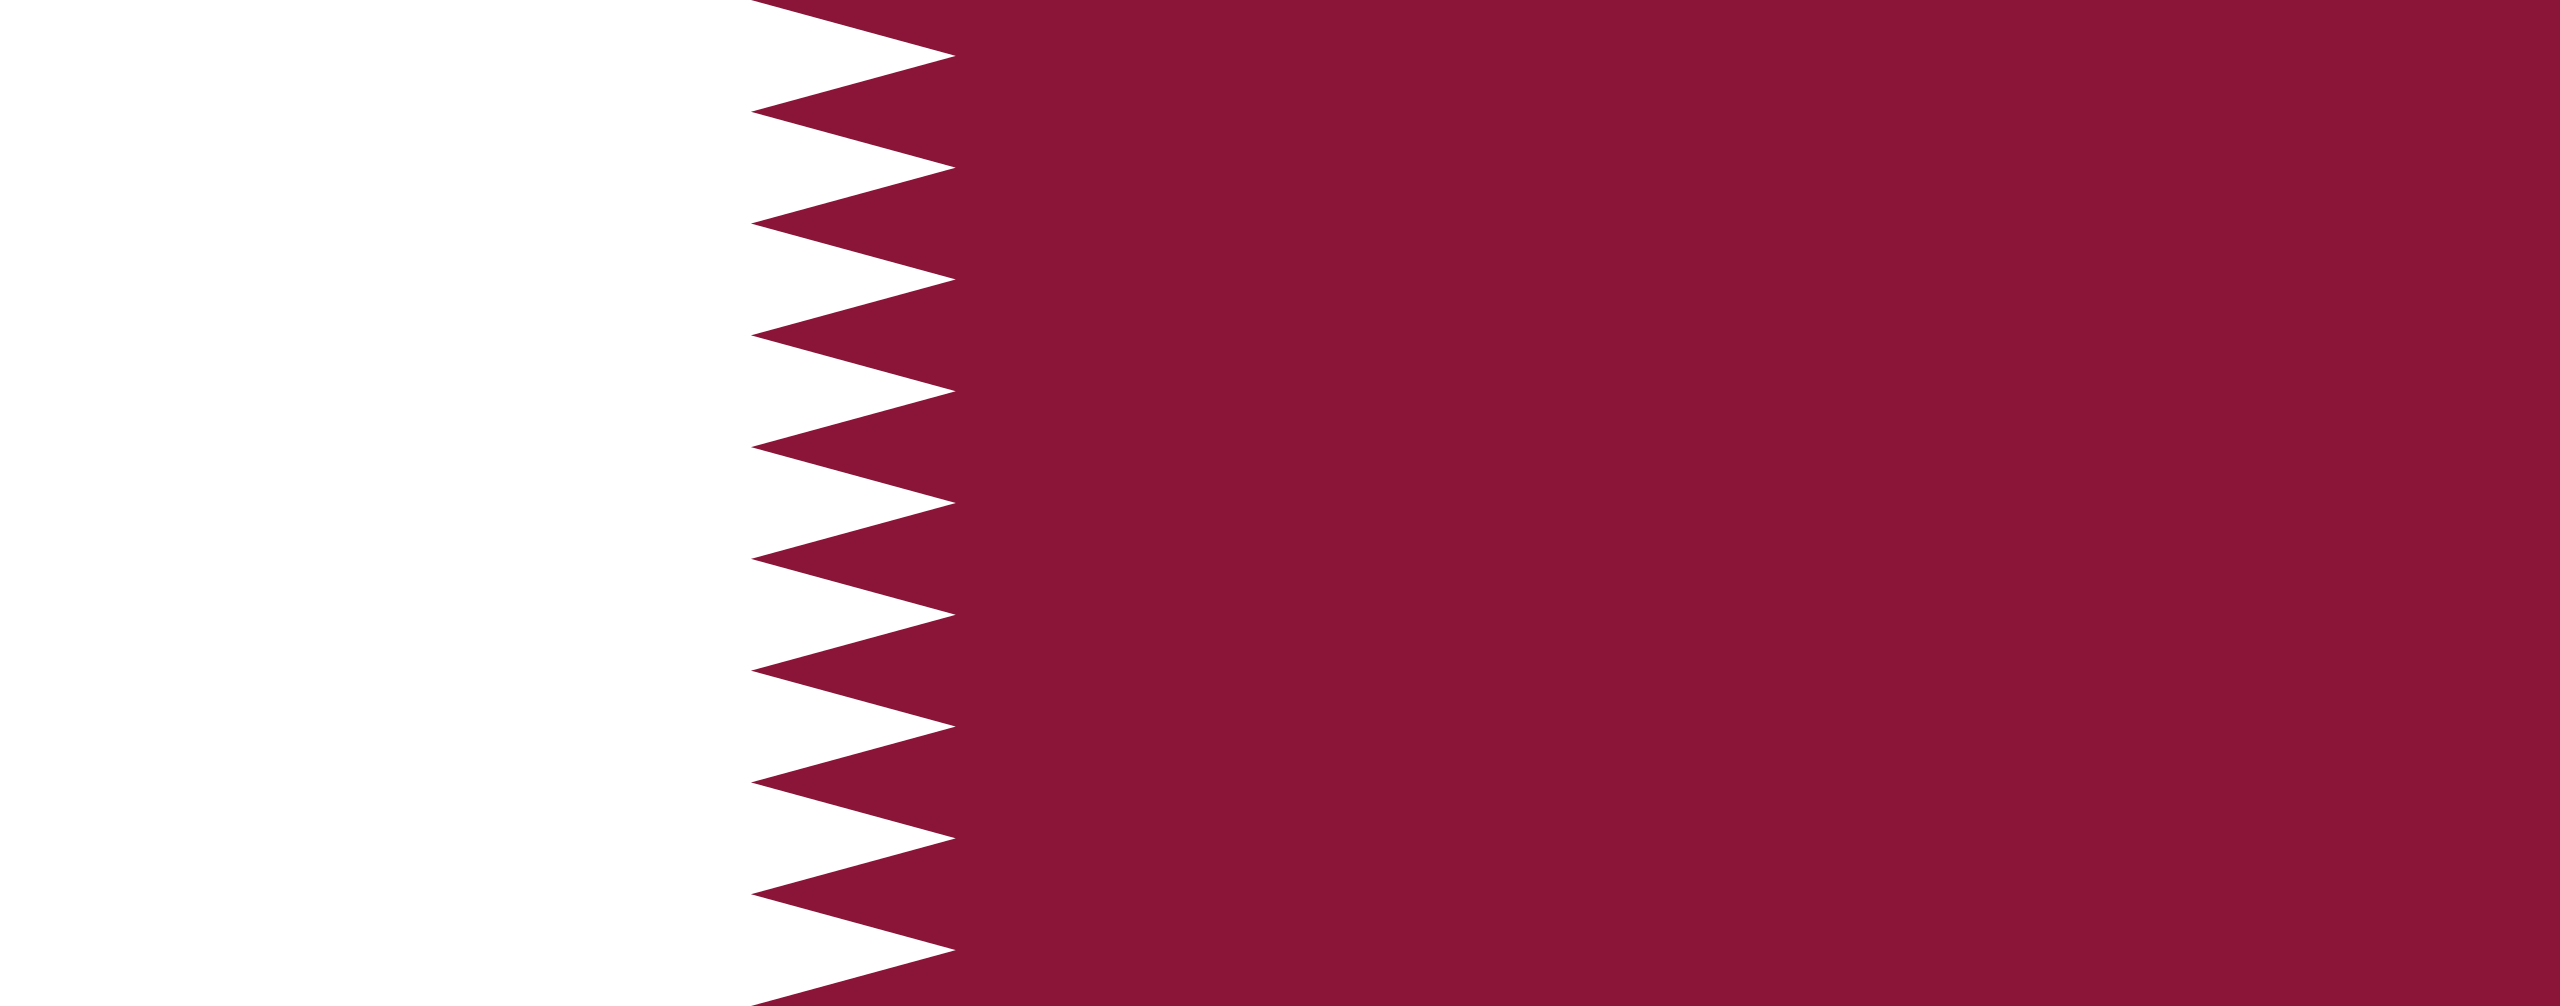 Aula Statului Qatar